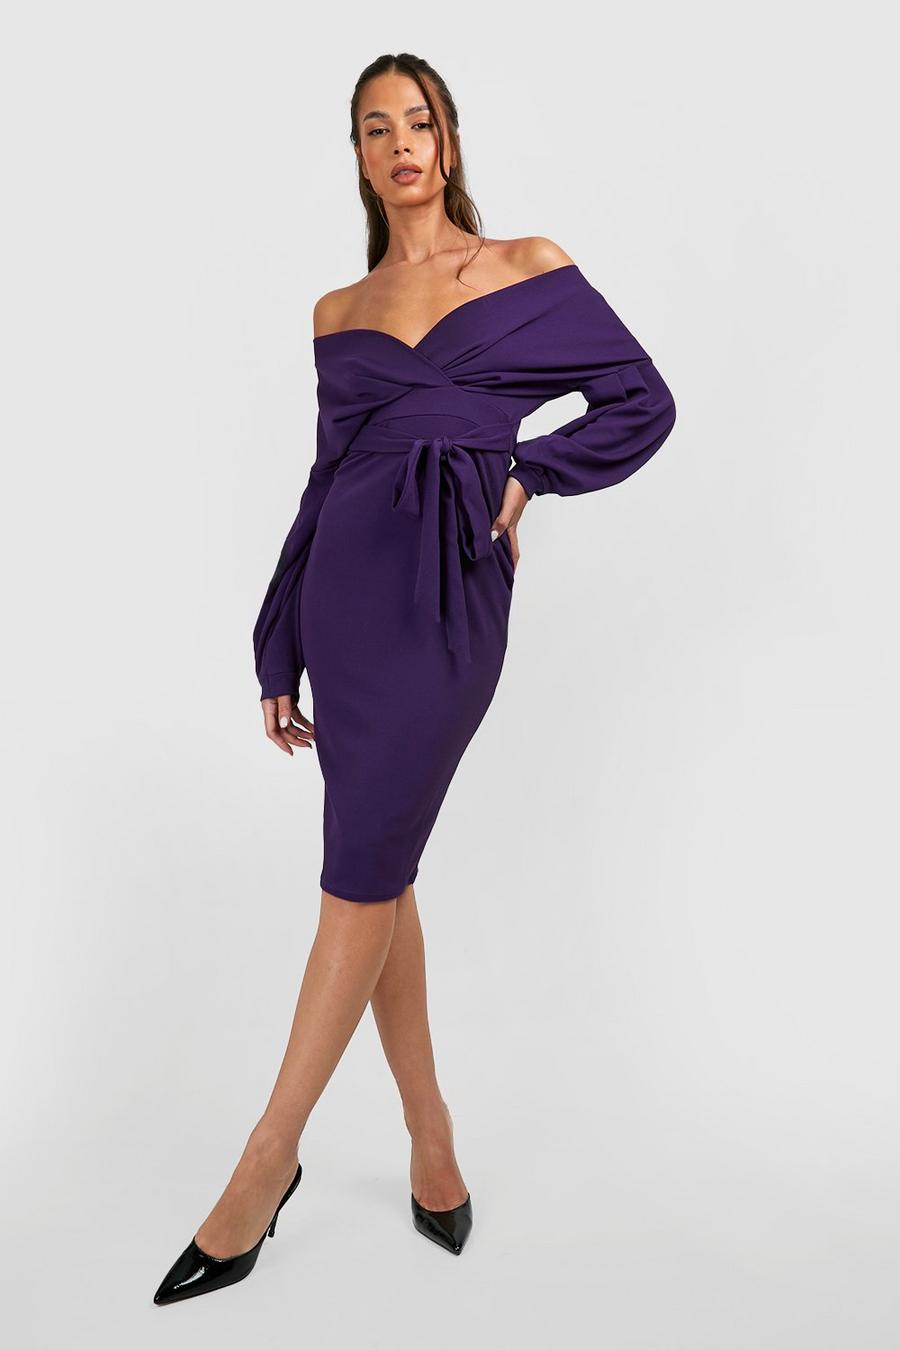 Jewel purple Off the Shoulder Wrap Midi Dress